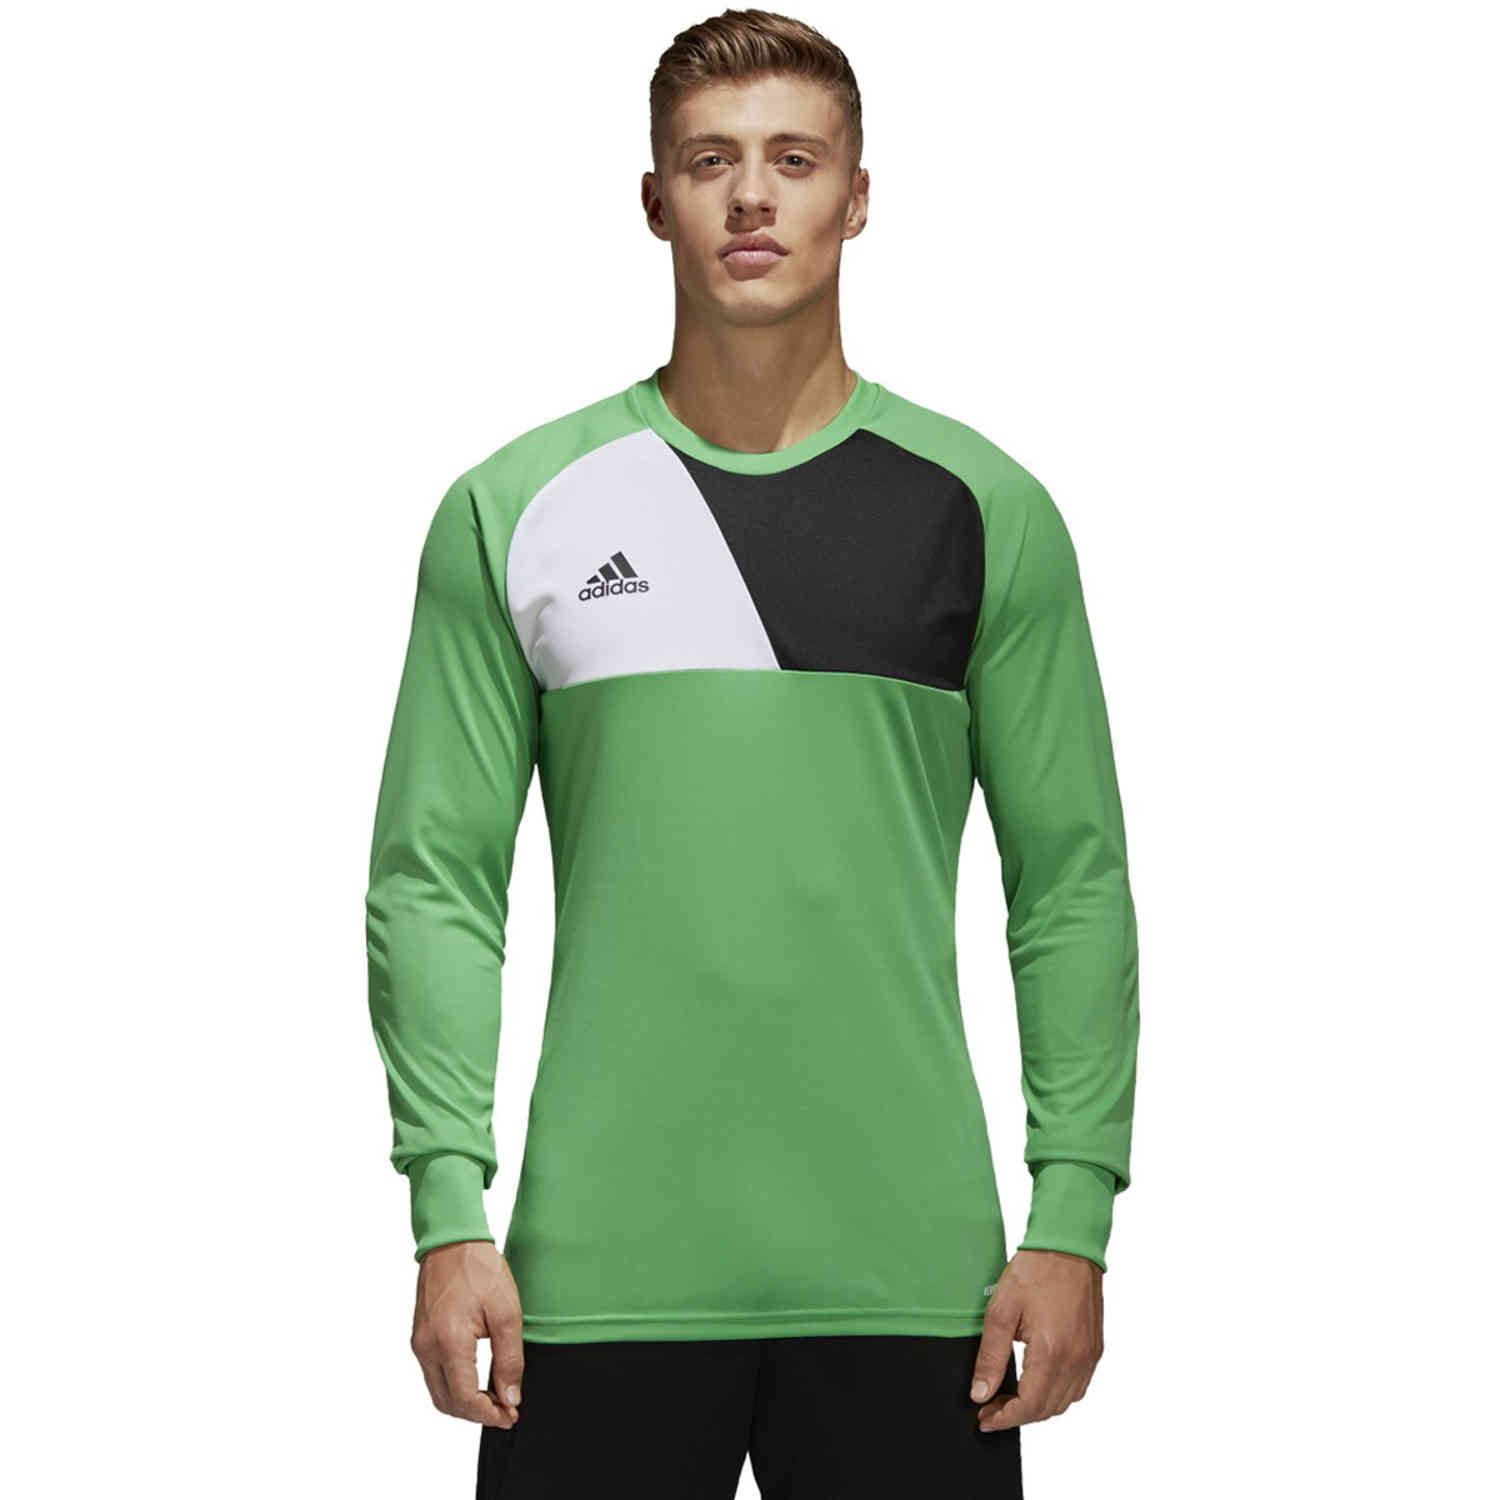 adidas Assita 17 Goalkeeper Jersey - Energy Green & White - Soccer ...